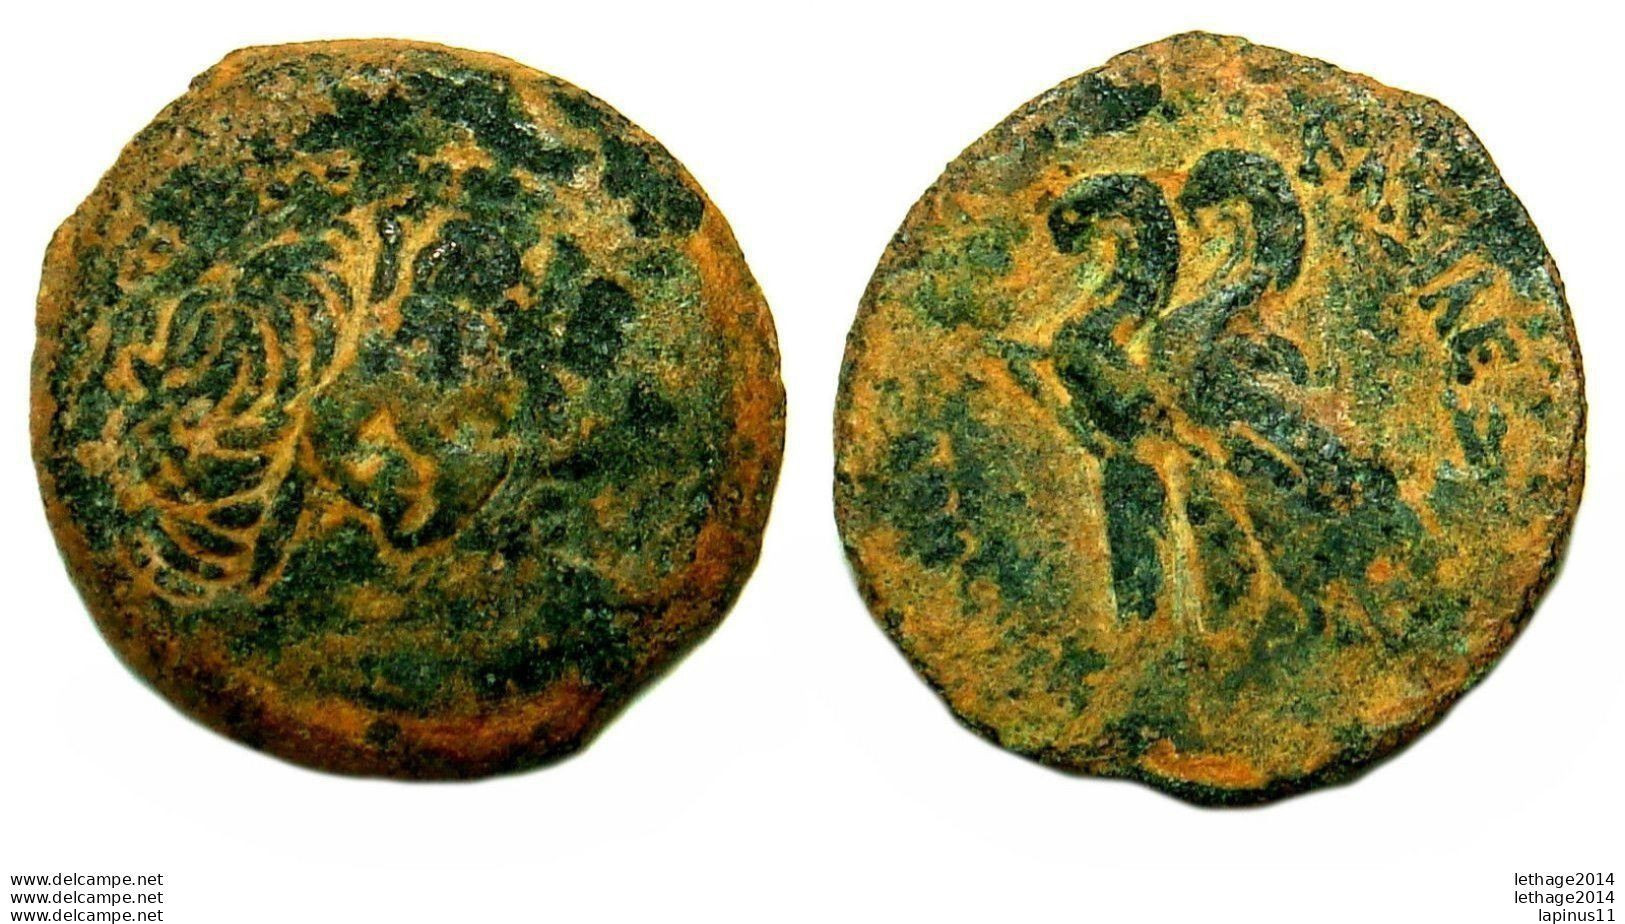 Coin Ptolemy VI Seleucus Alexandria Lebanon Syrie Iraq Kuwait Turkey Persia Persia Pakistan (8 GR, 22 Mm)180 BC/145 BC - Orientales